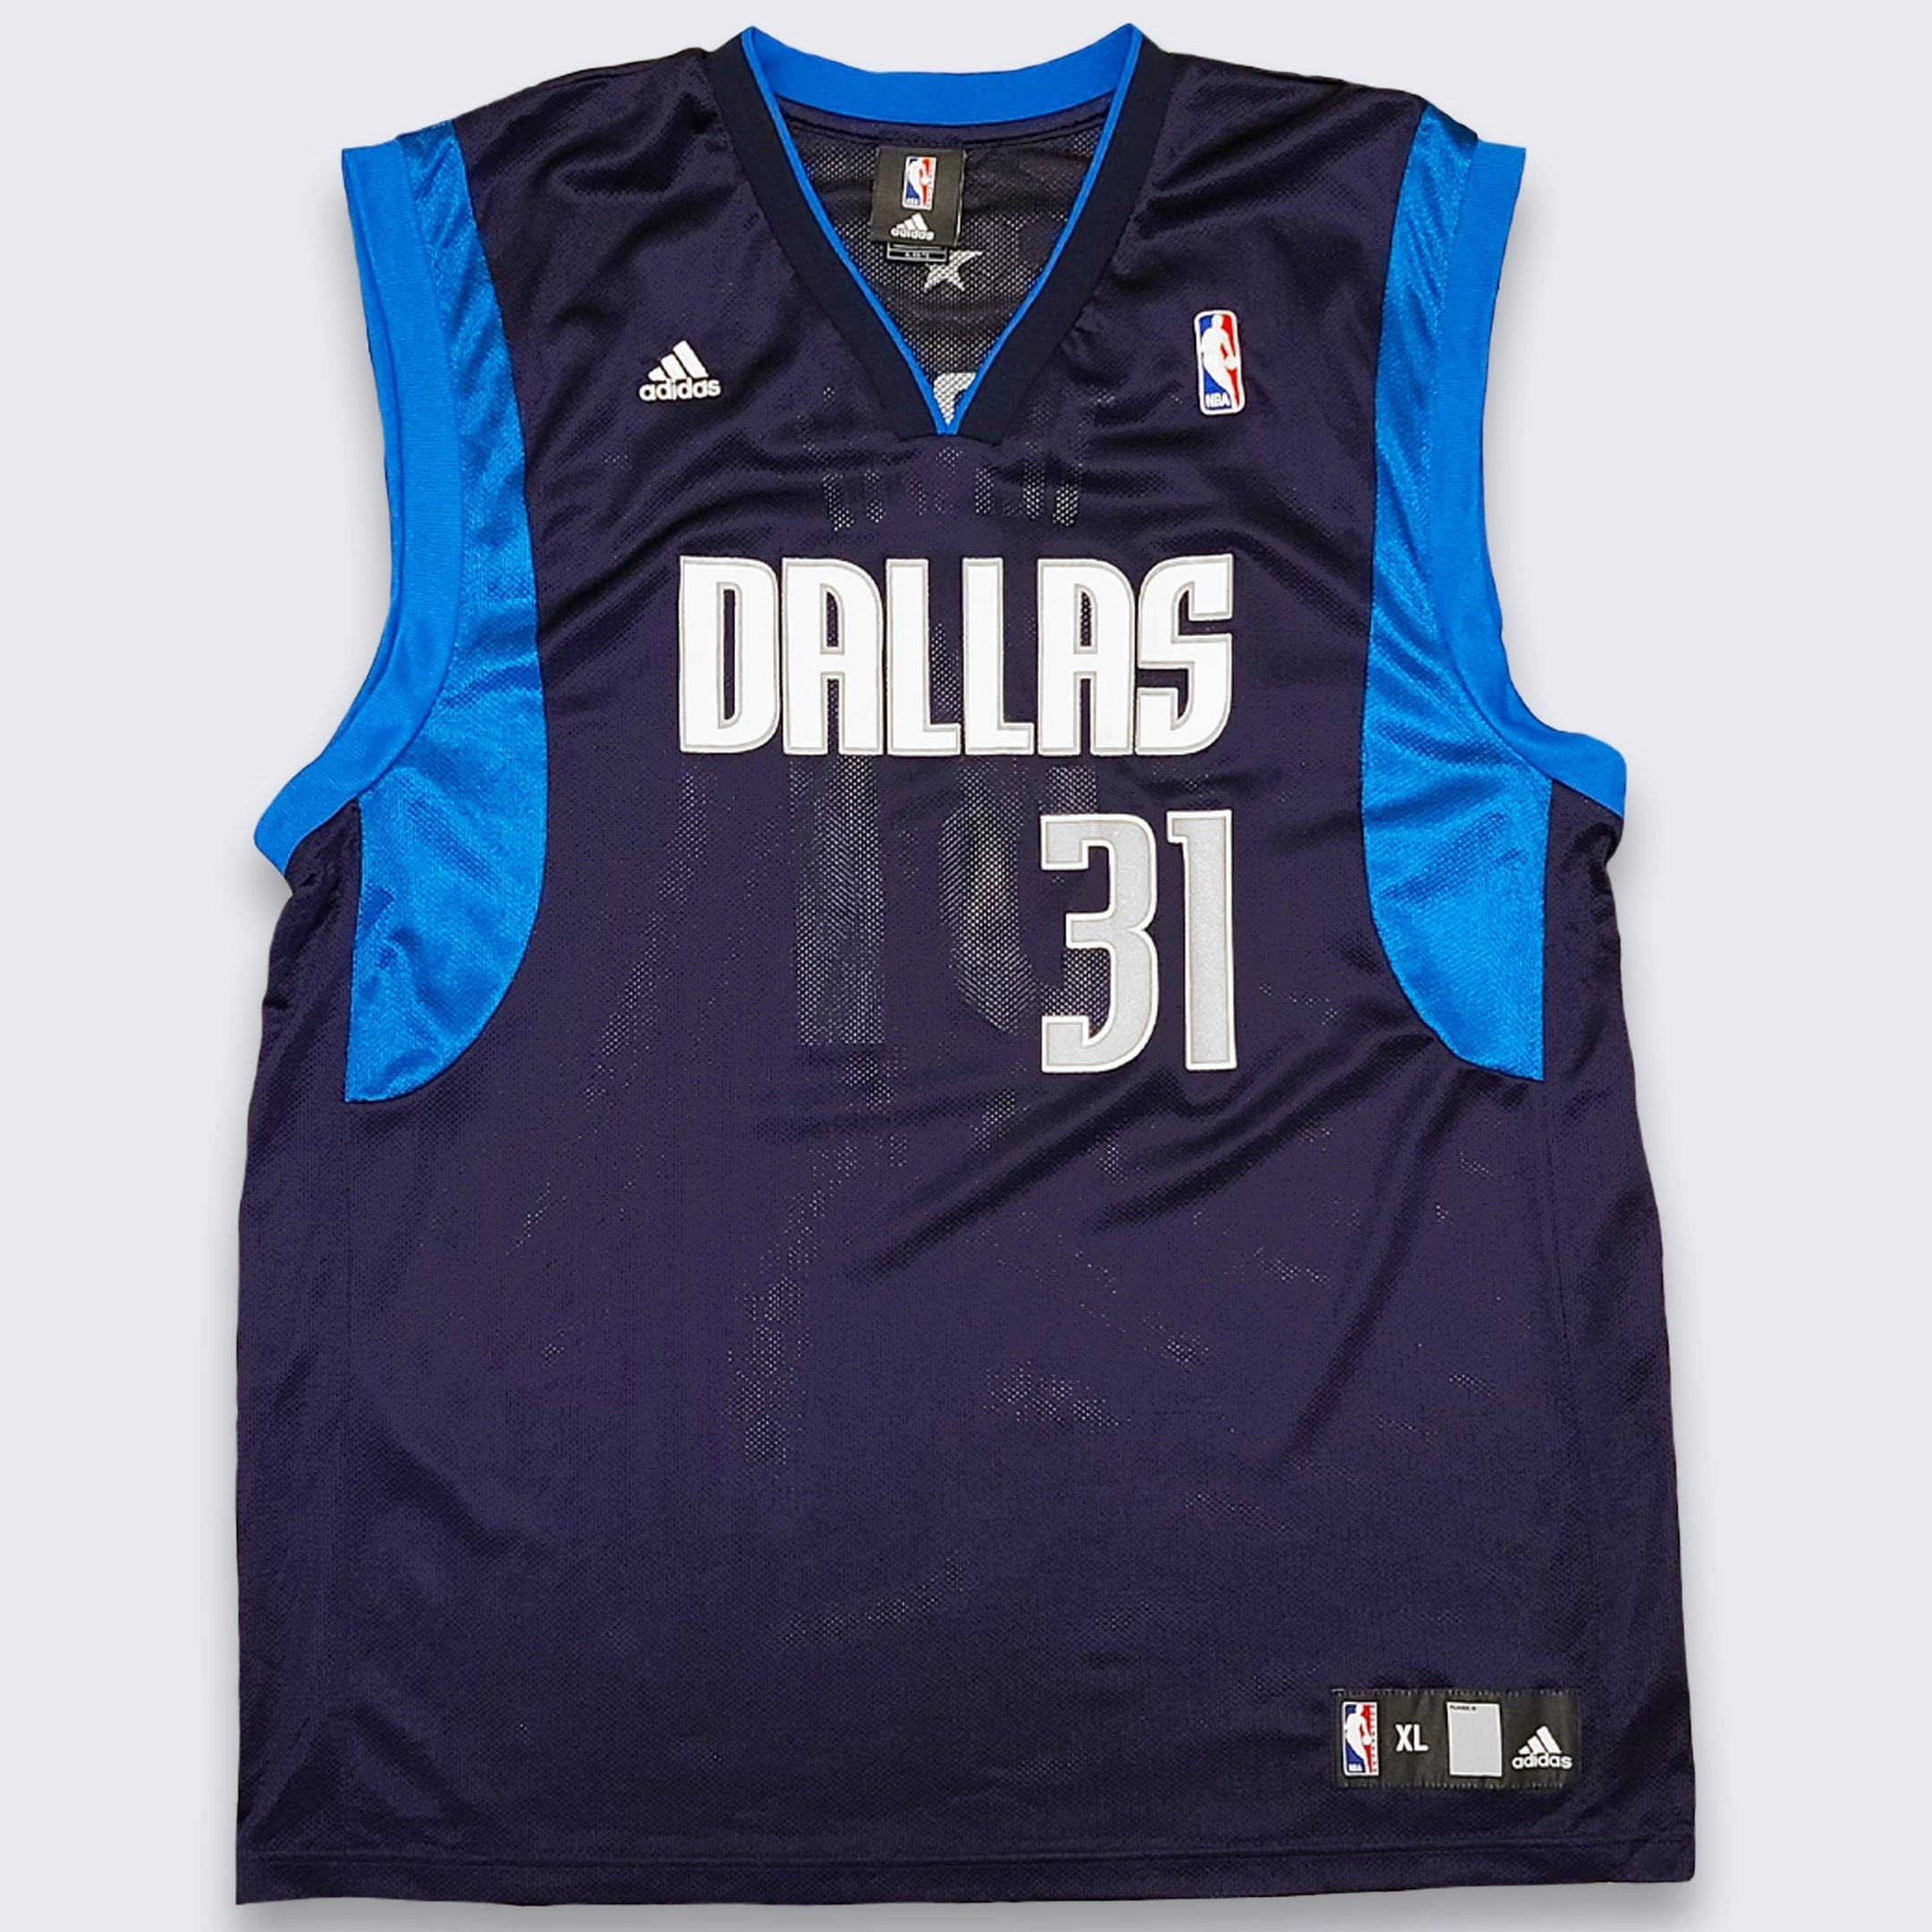 Dallas Mavericks Gift Guide: 10 must-have Dirk Nowitzki items